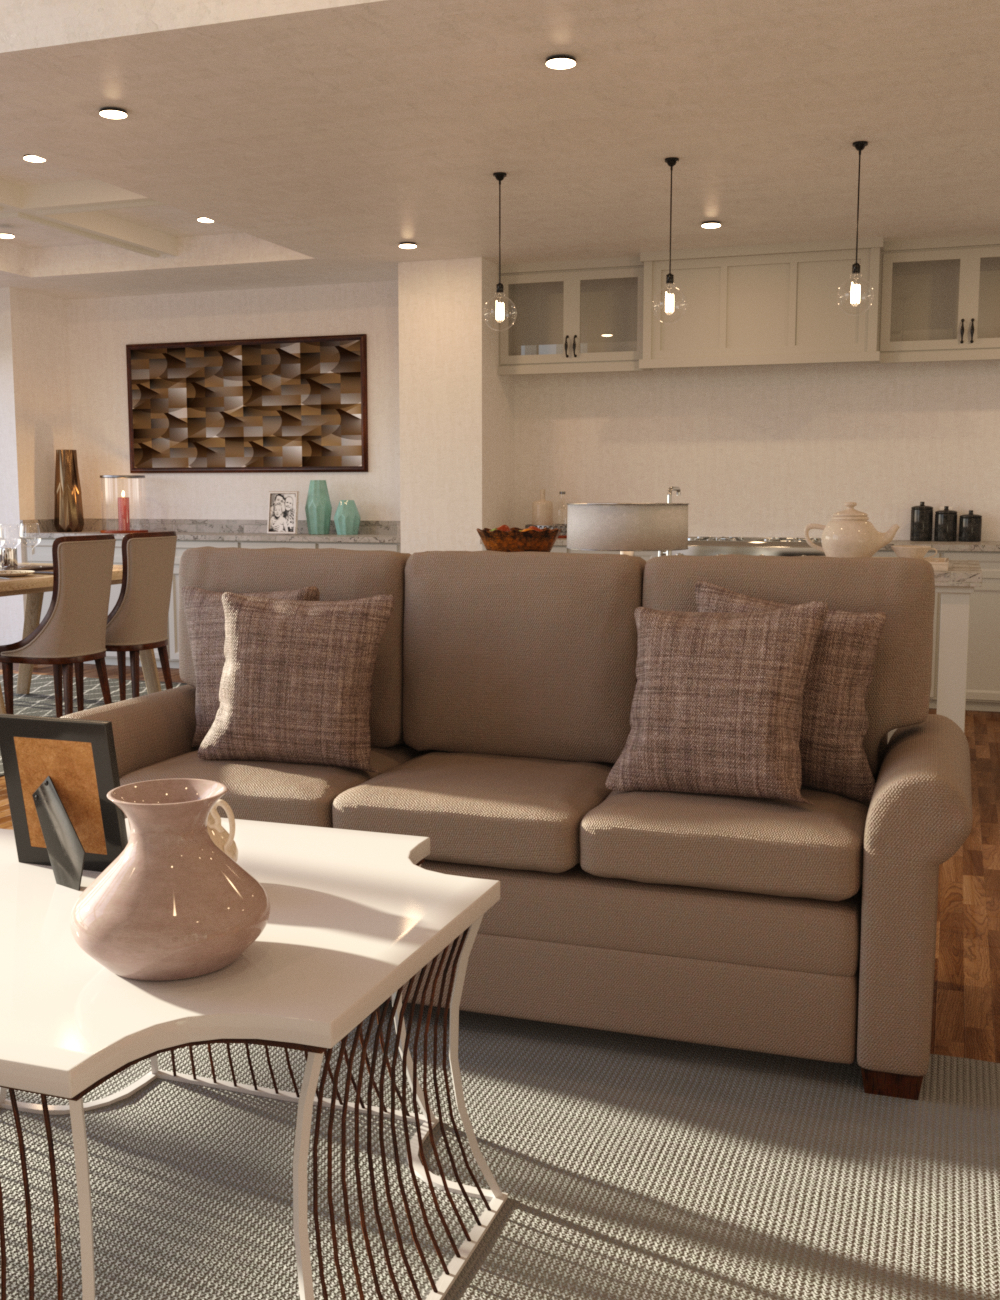 FG Modern Kitchen & Living Room by: Ironman, 3D Models by Daz 3D